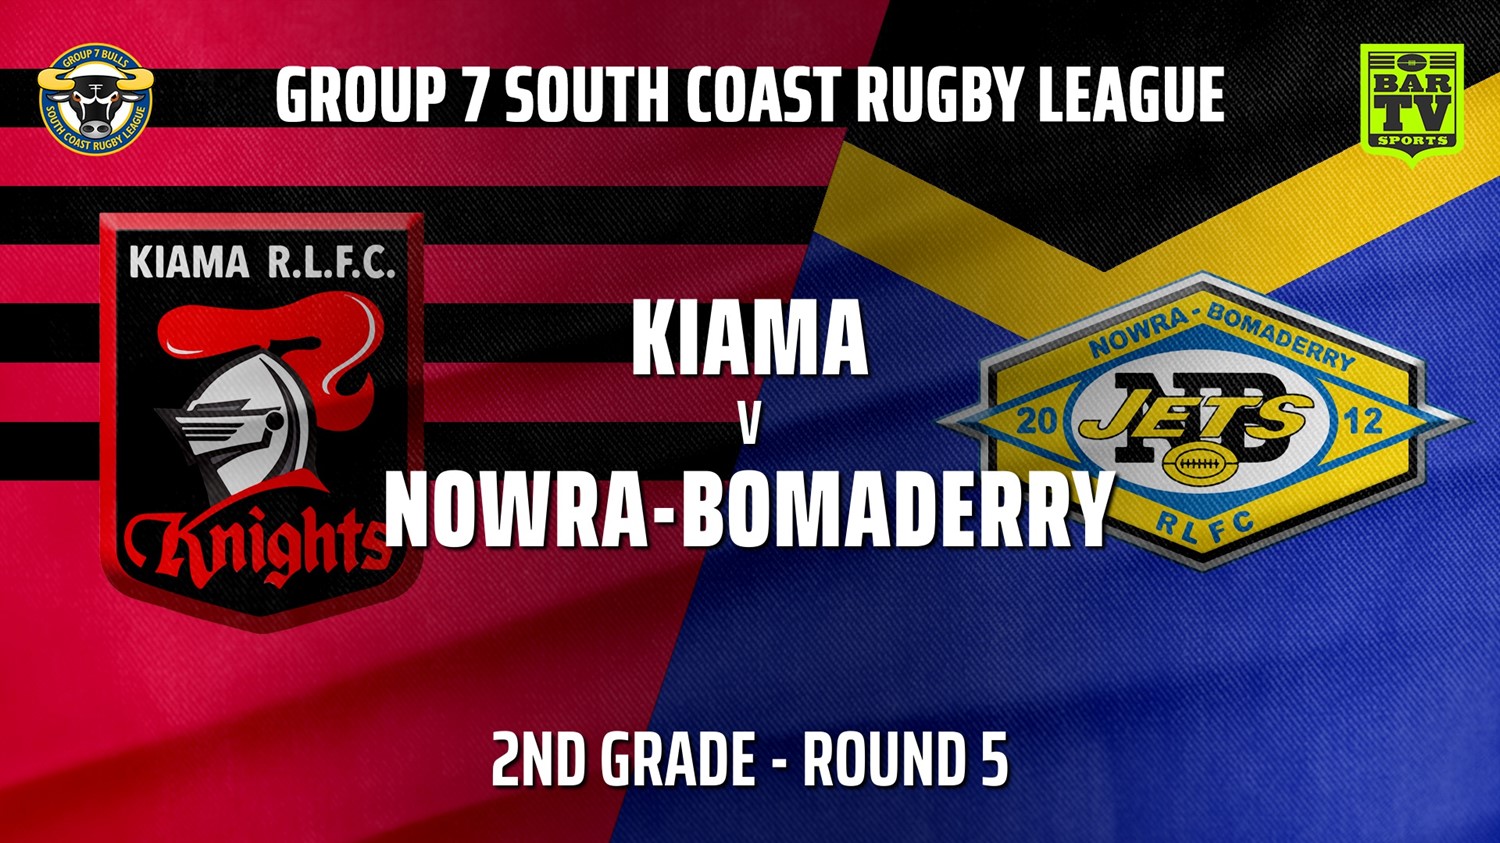 210516-Group 7 RL Round 5 - 2nd Grade - Kiama Knights v Nowra-Bomaderry  Slate Image